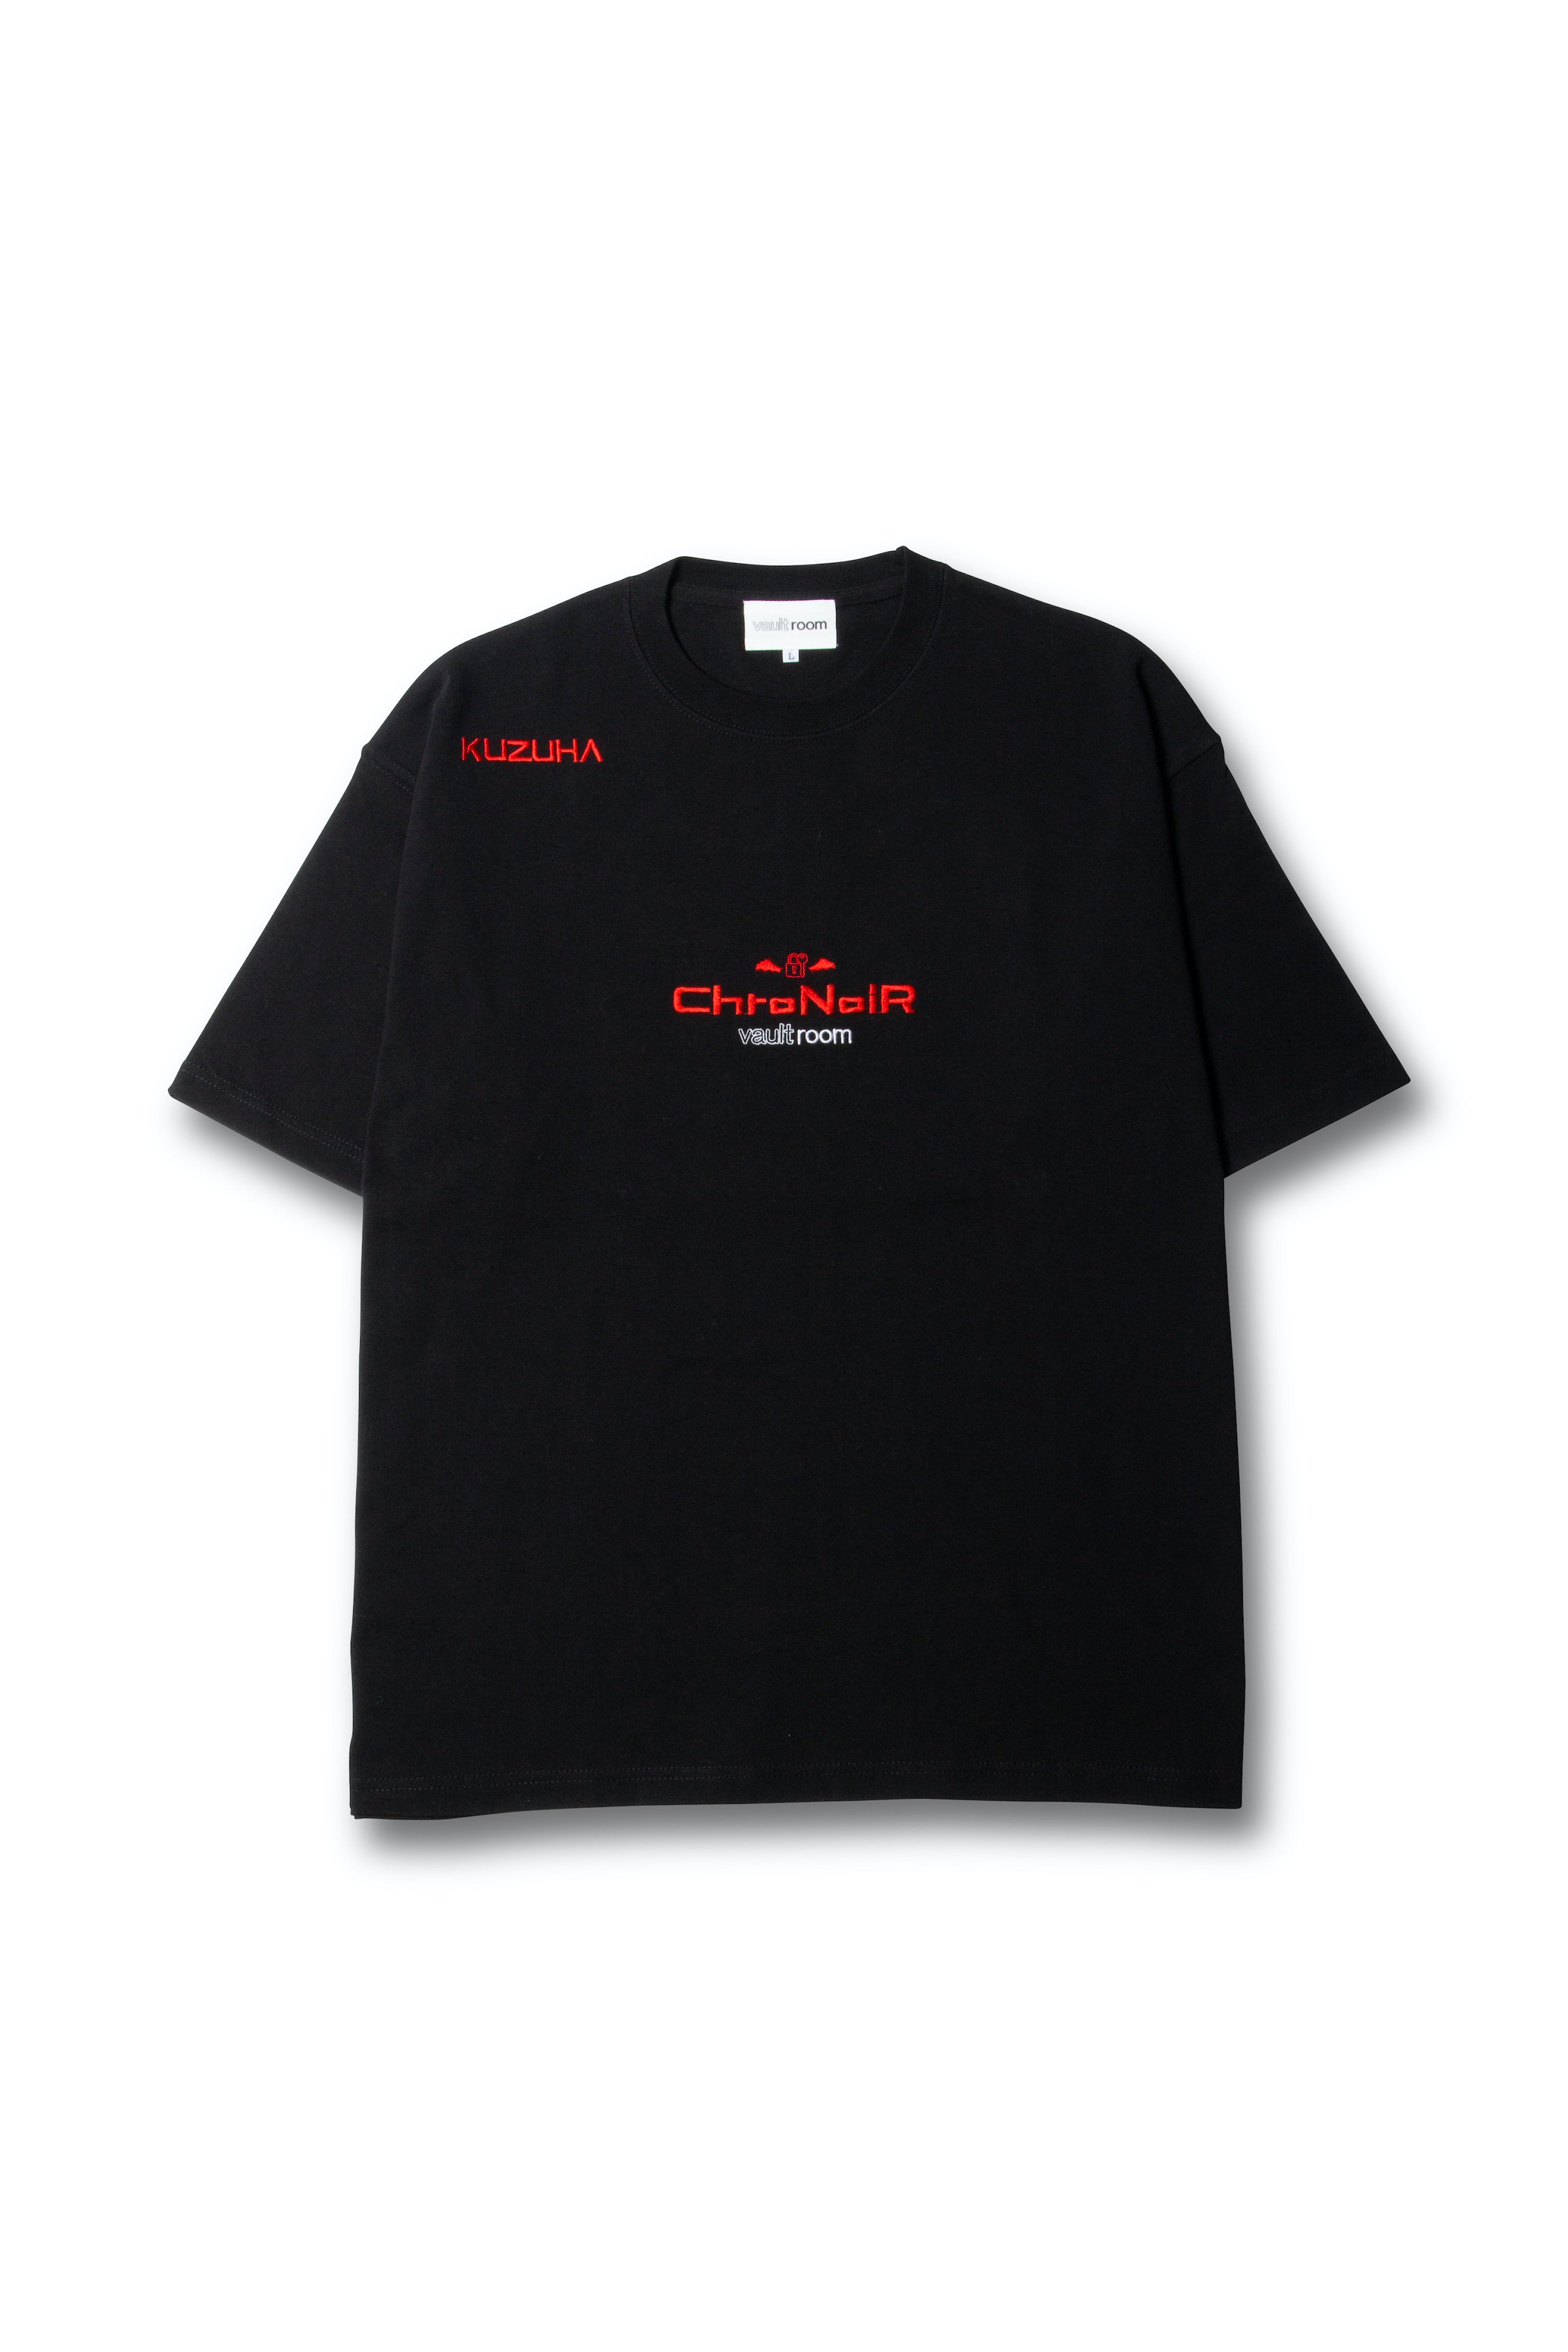 vaultroom “KUZUHA” TEE COLOR: BLACKクズハ - Tシャツ/カットソー ...